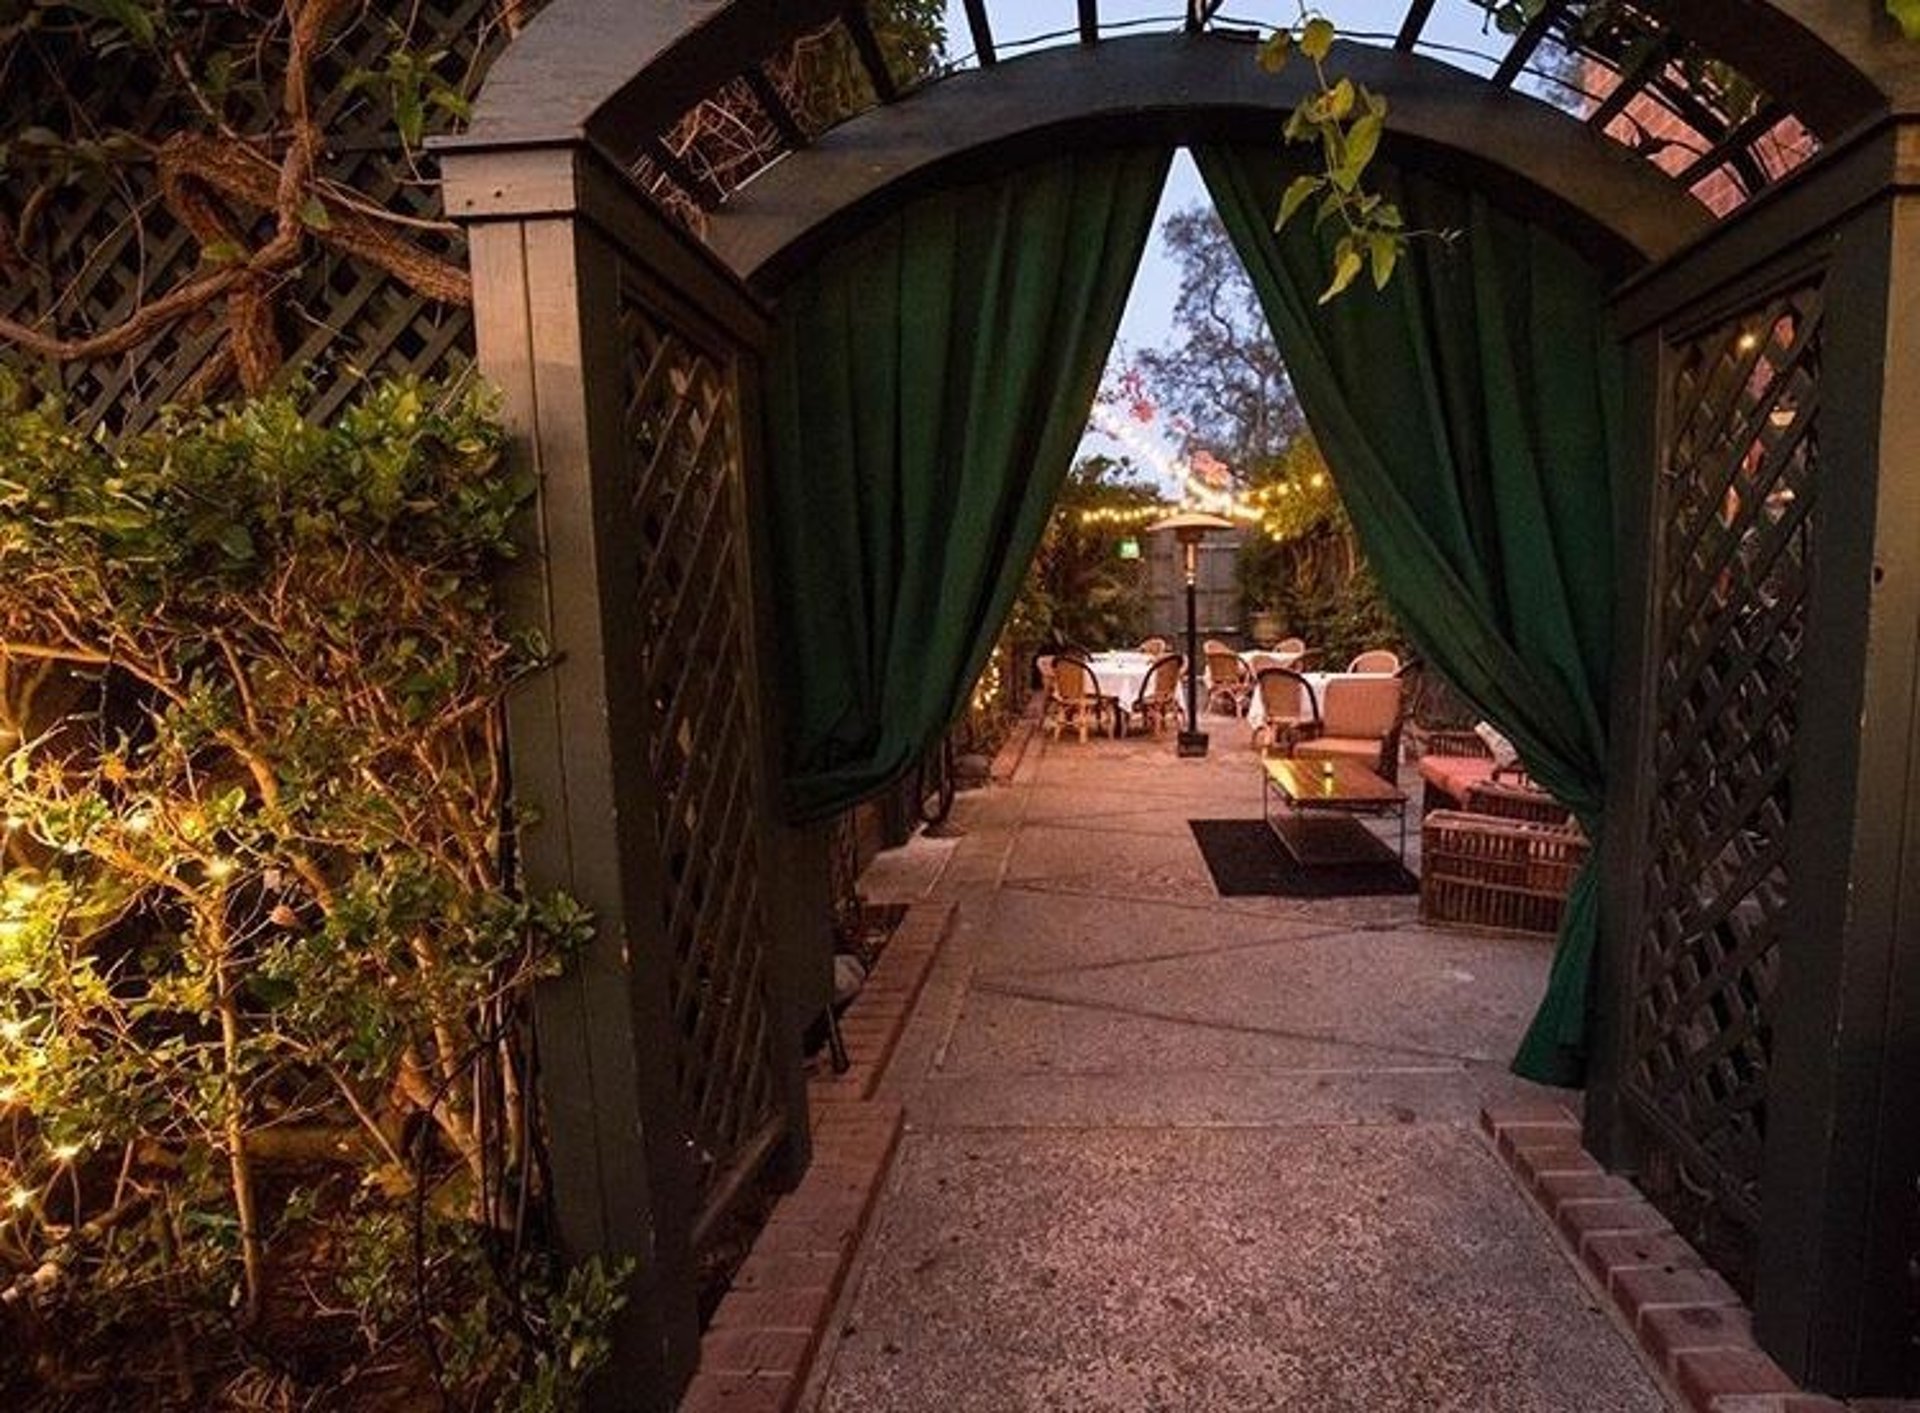 The Buffalo Club - The Private Courtyard - Restaurant in Santa Monica, CA |  The Vendry